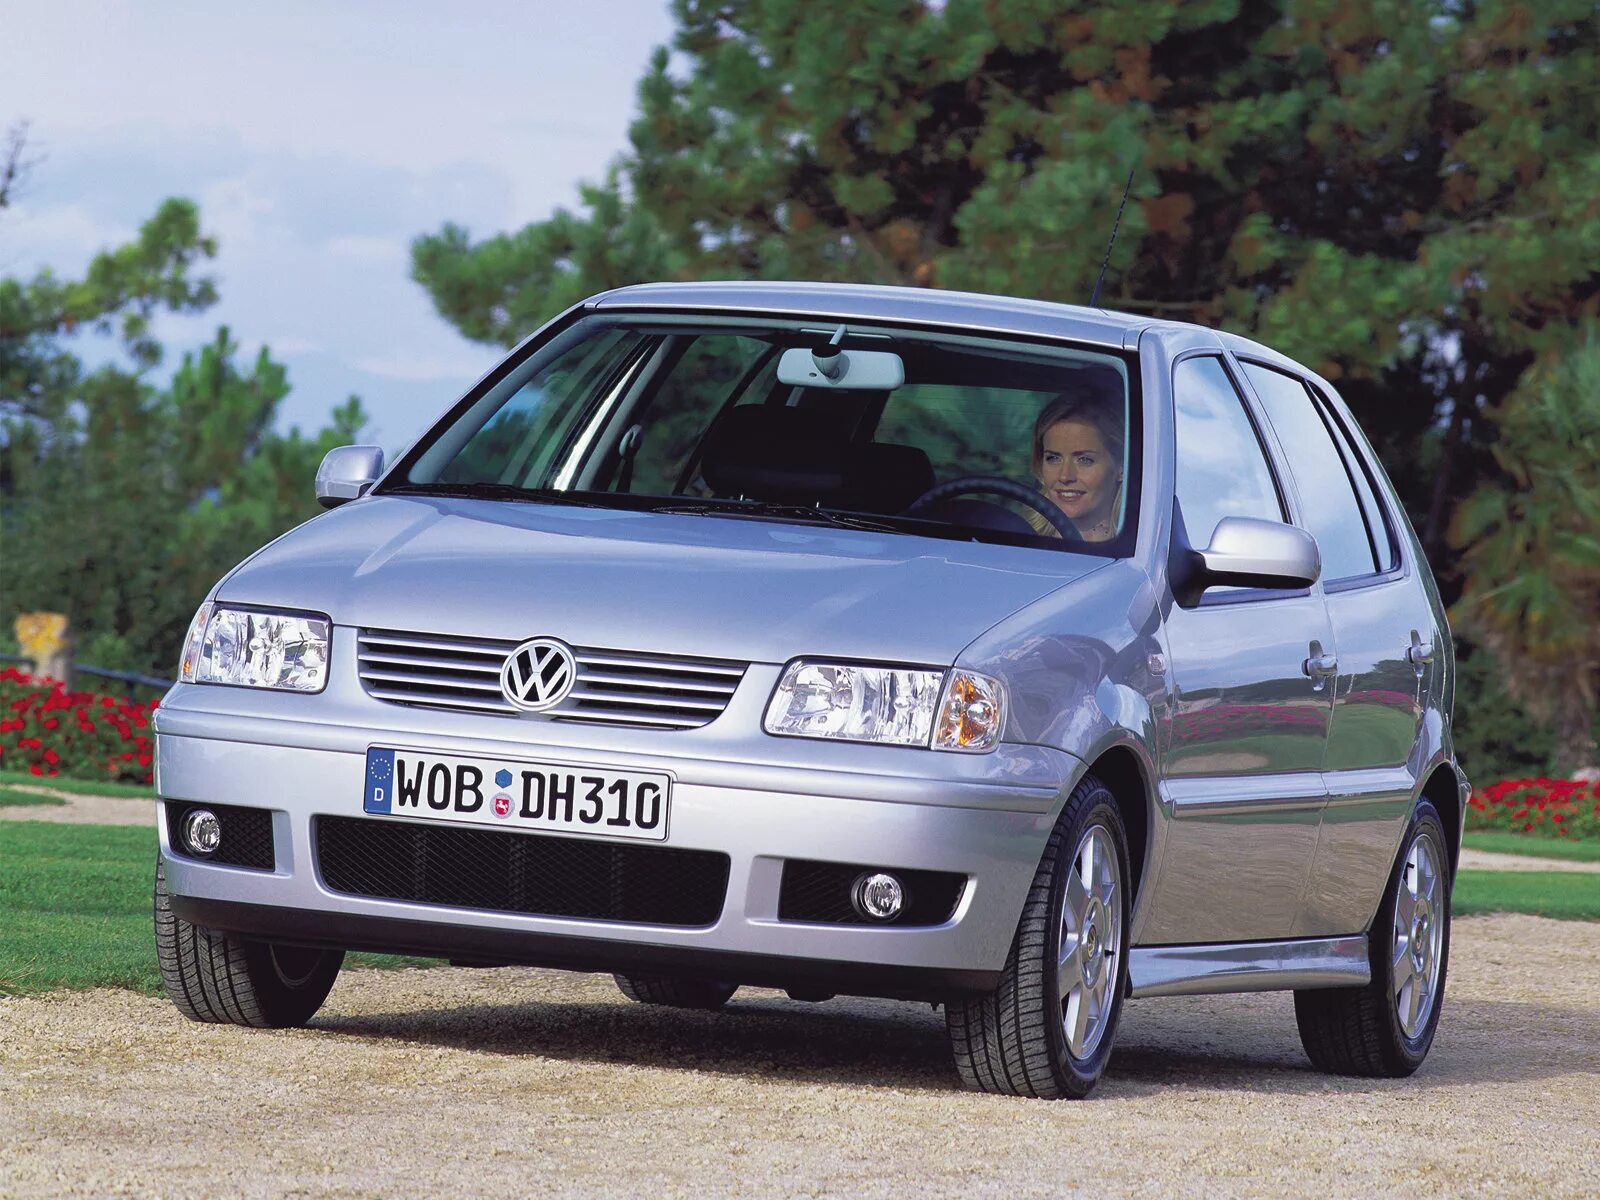 Volkswagen Polo 2001 1.4 3 поколение. Volkswagen Polo 2001 Hatchback. Фольксваген поло 1999 1.4 хэтчбек. Фольксваген поло 1 поколение. Поло 1 поколение